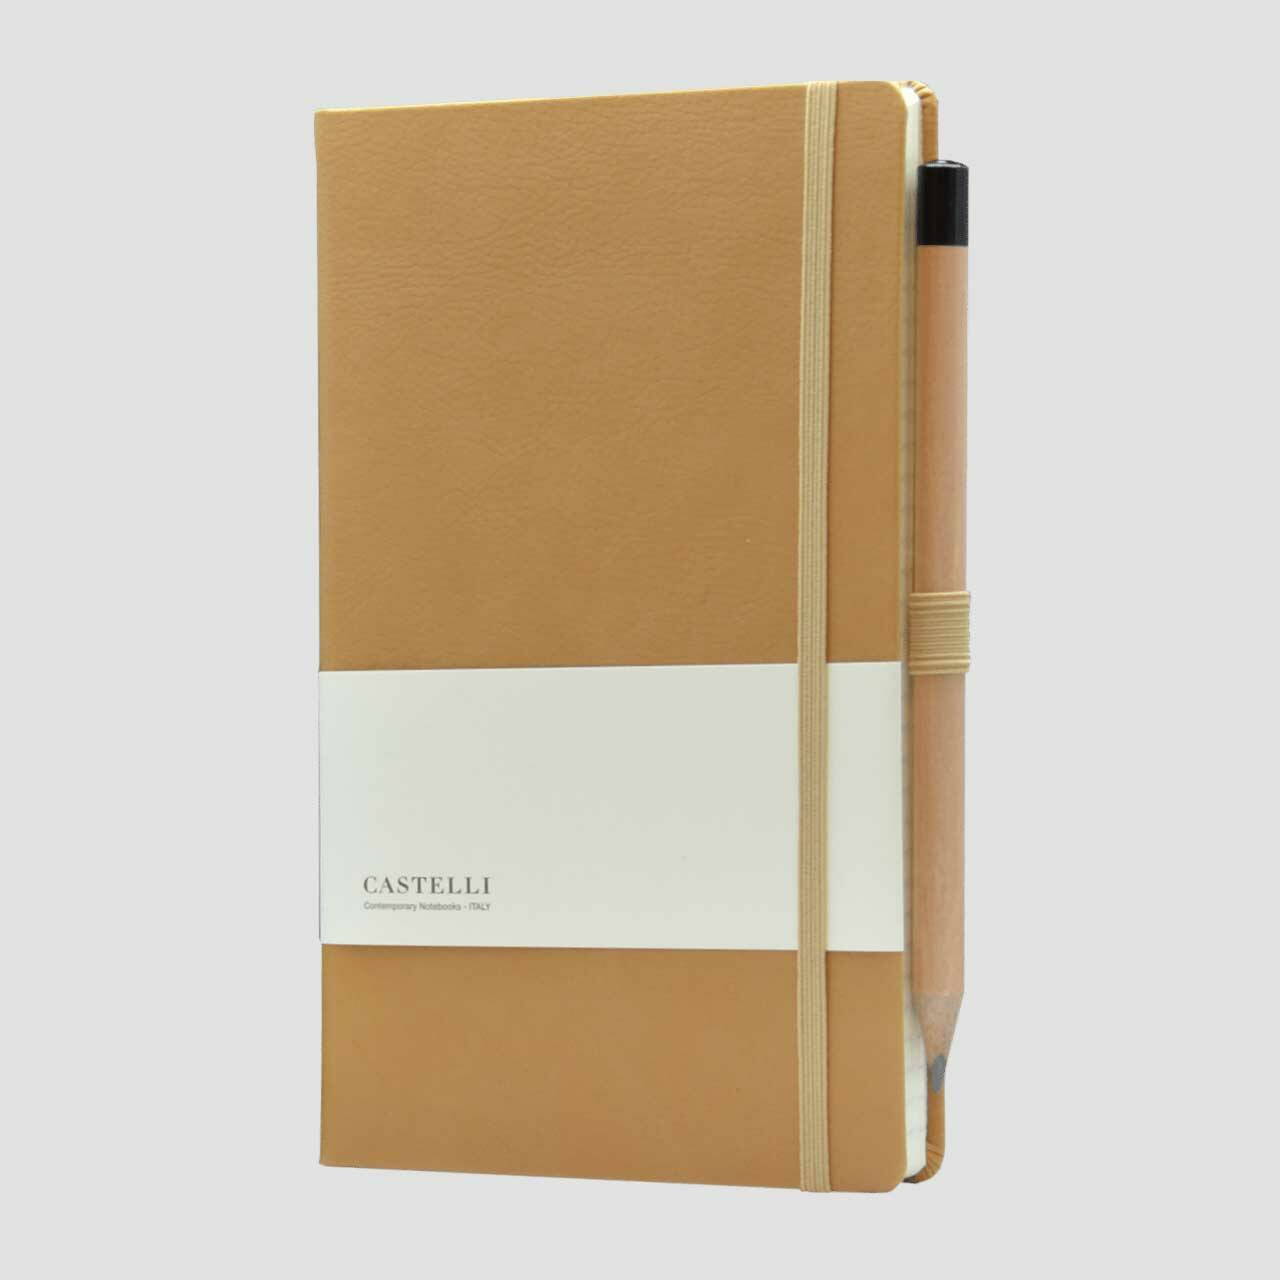 Castelli notitieboek lederlook met banderol en potlood met houder, cognac